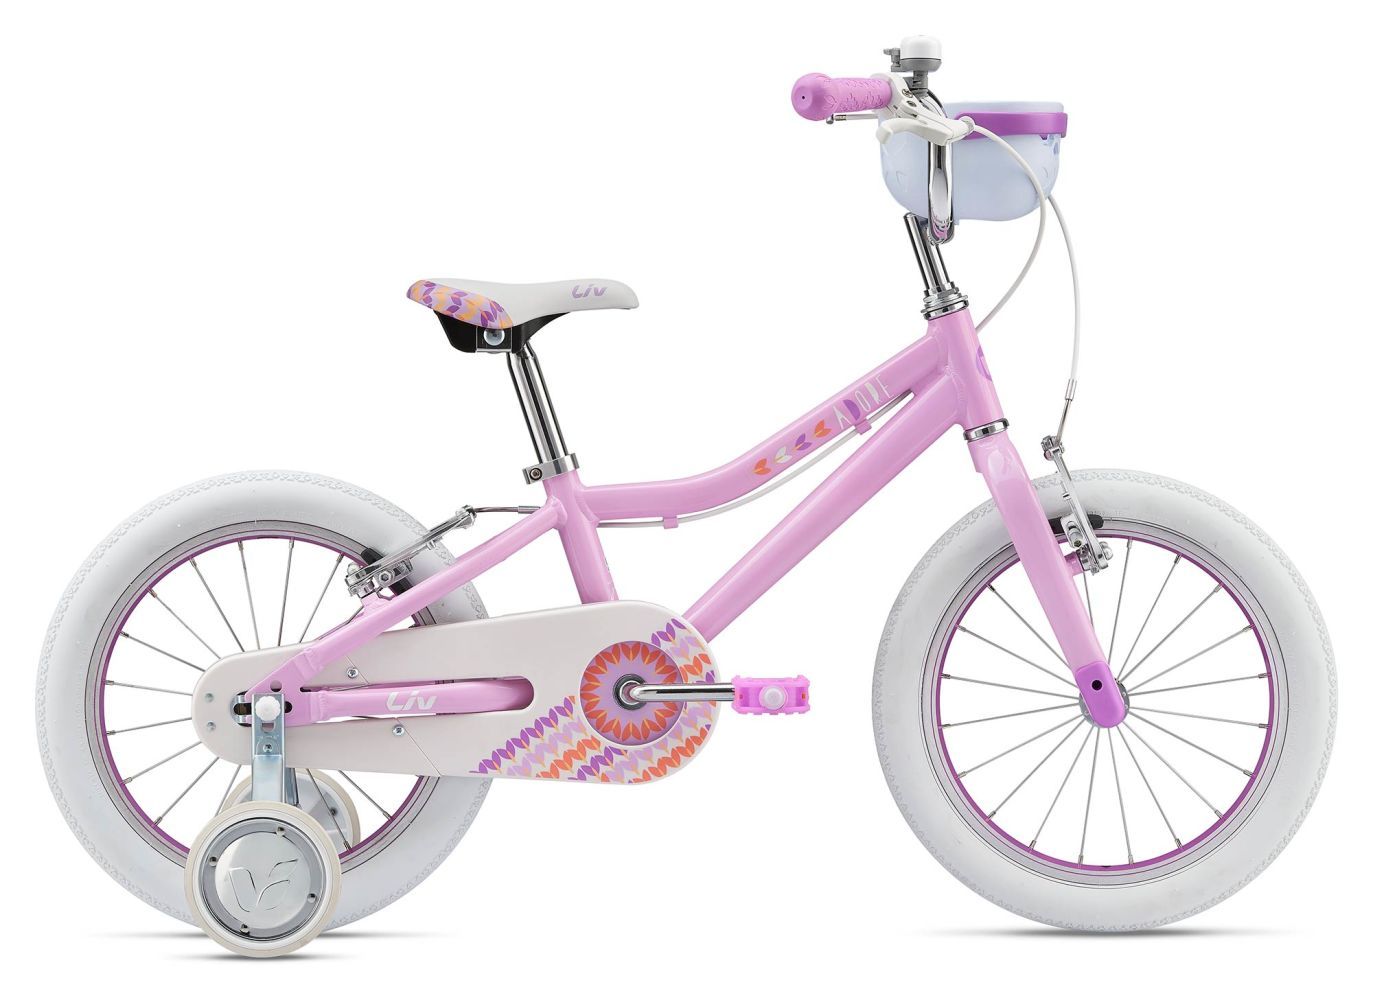 16 inch girls bike with stabilisers